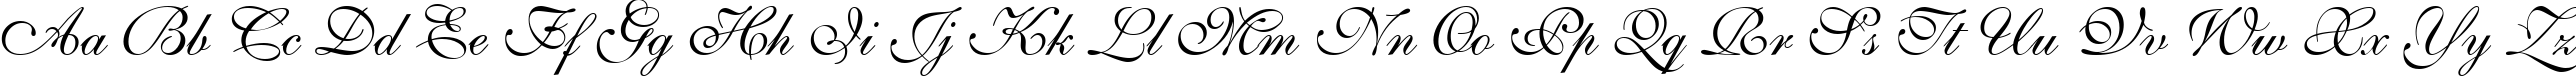 Пример написания английского алфавита шрифтом English 111 Presto BT